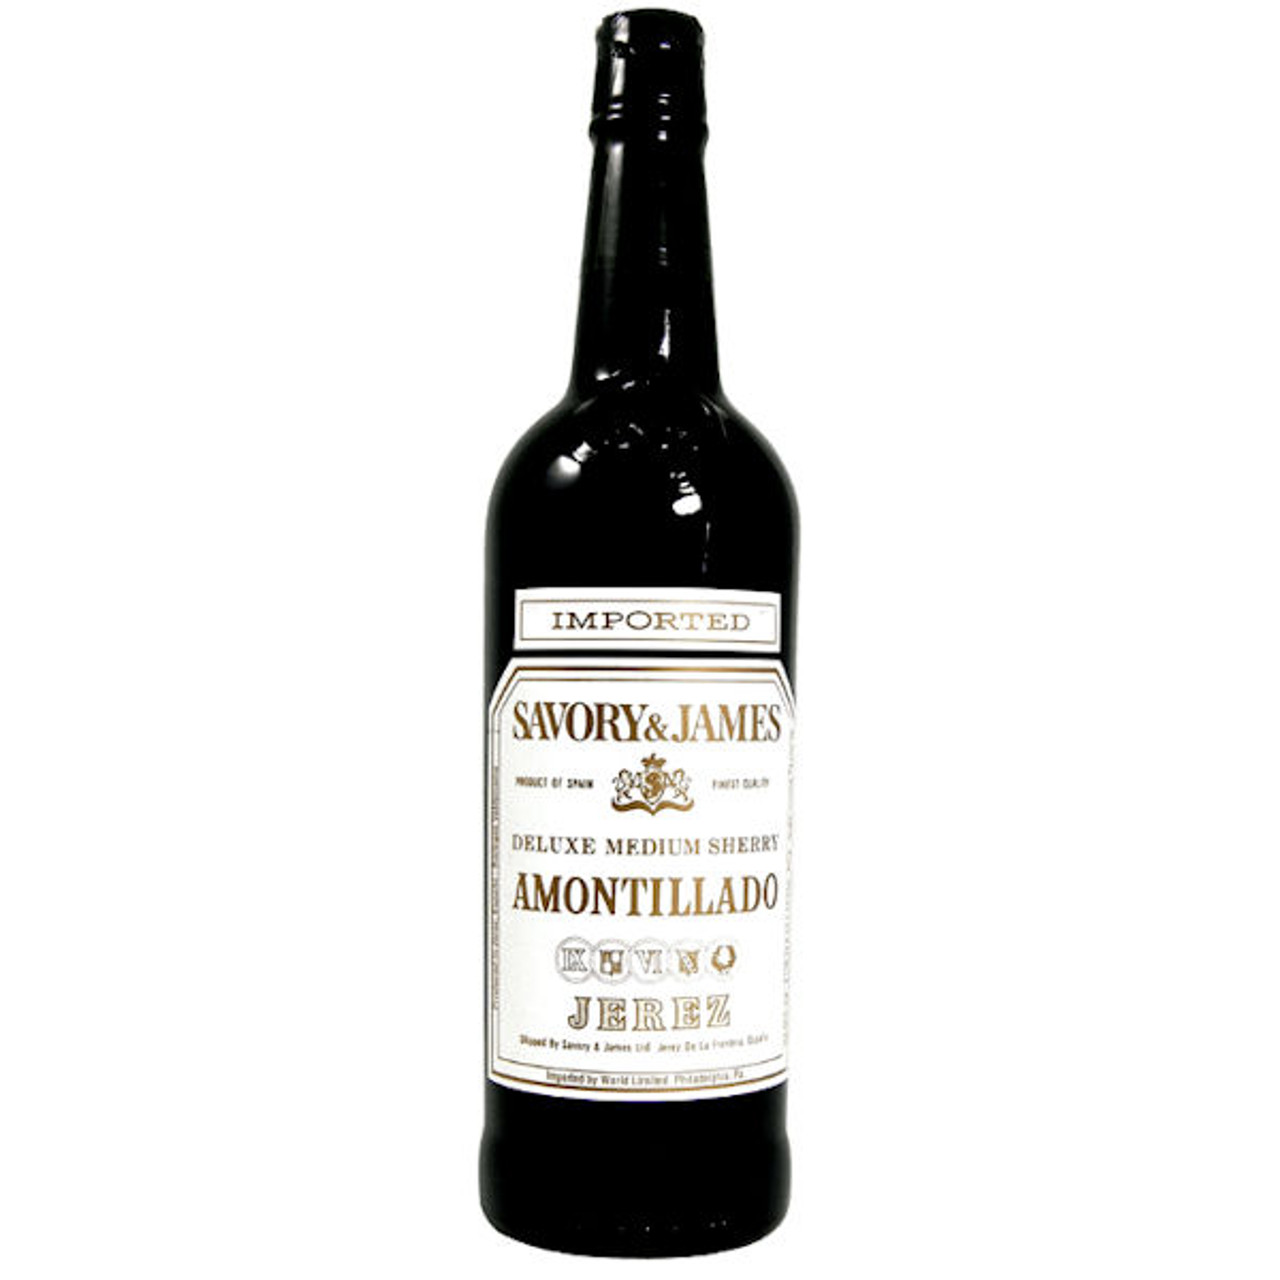 Savory & James Amontillado Medium Sherry 750ml